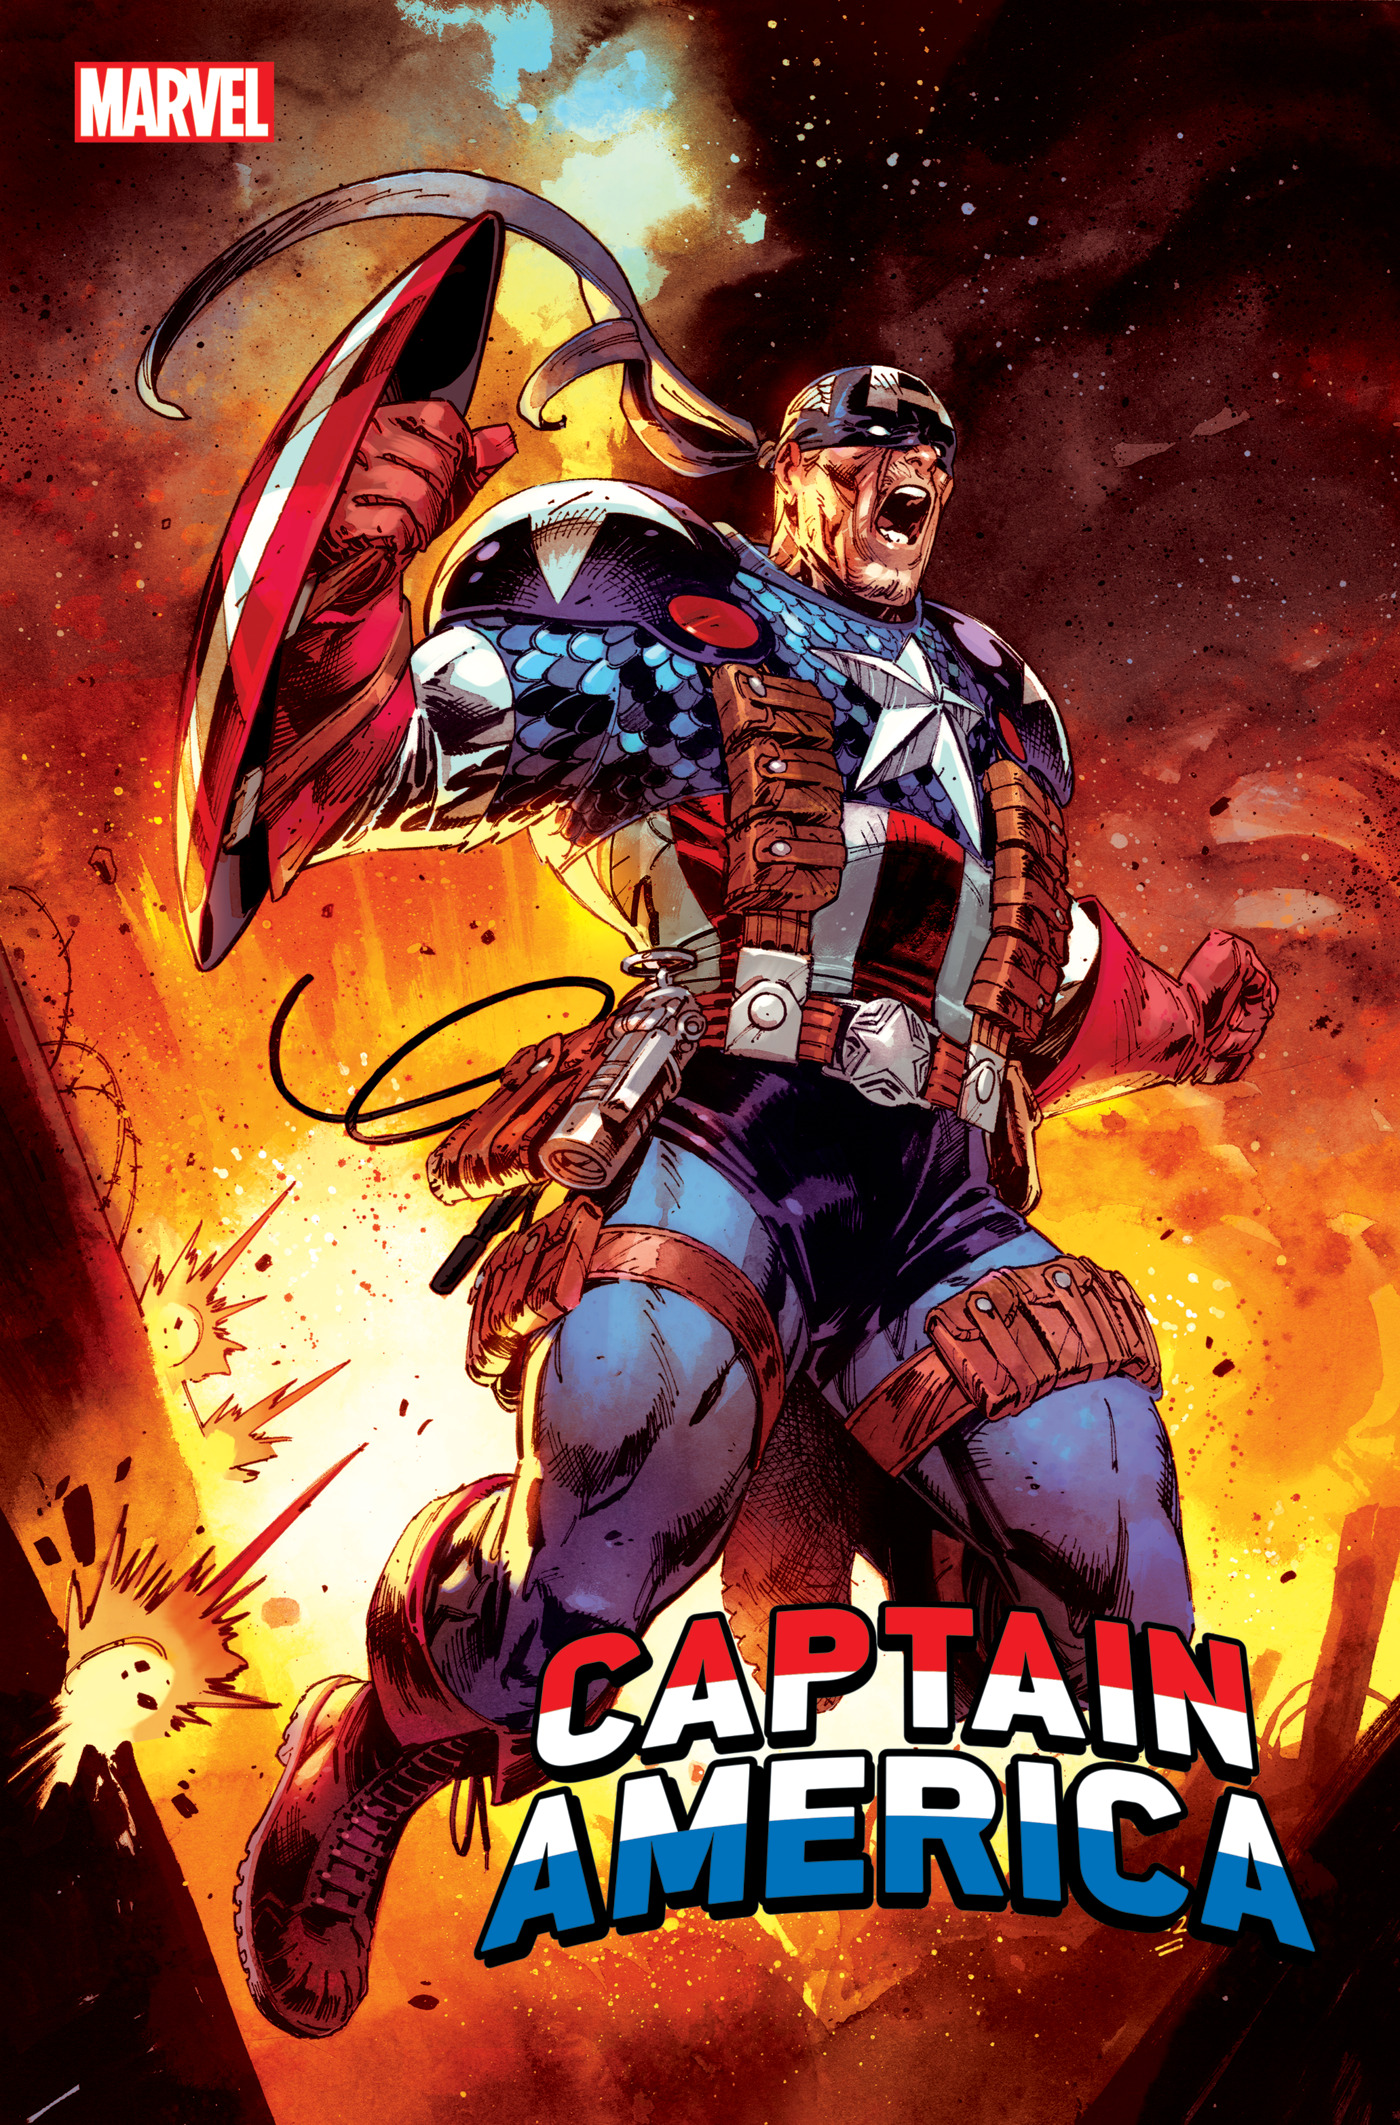 Marvel Comics Captain America Civil War Movie Images 24 oz Tritan